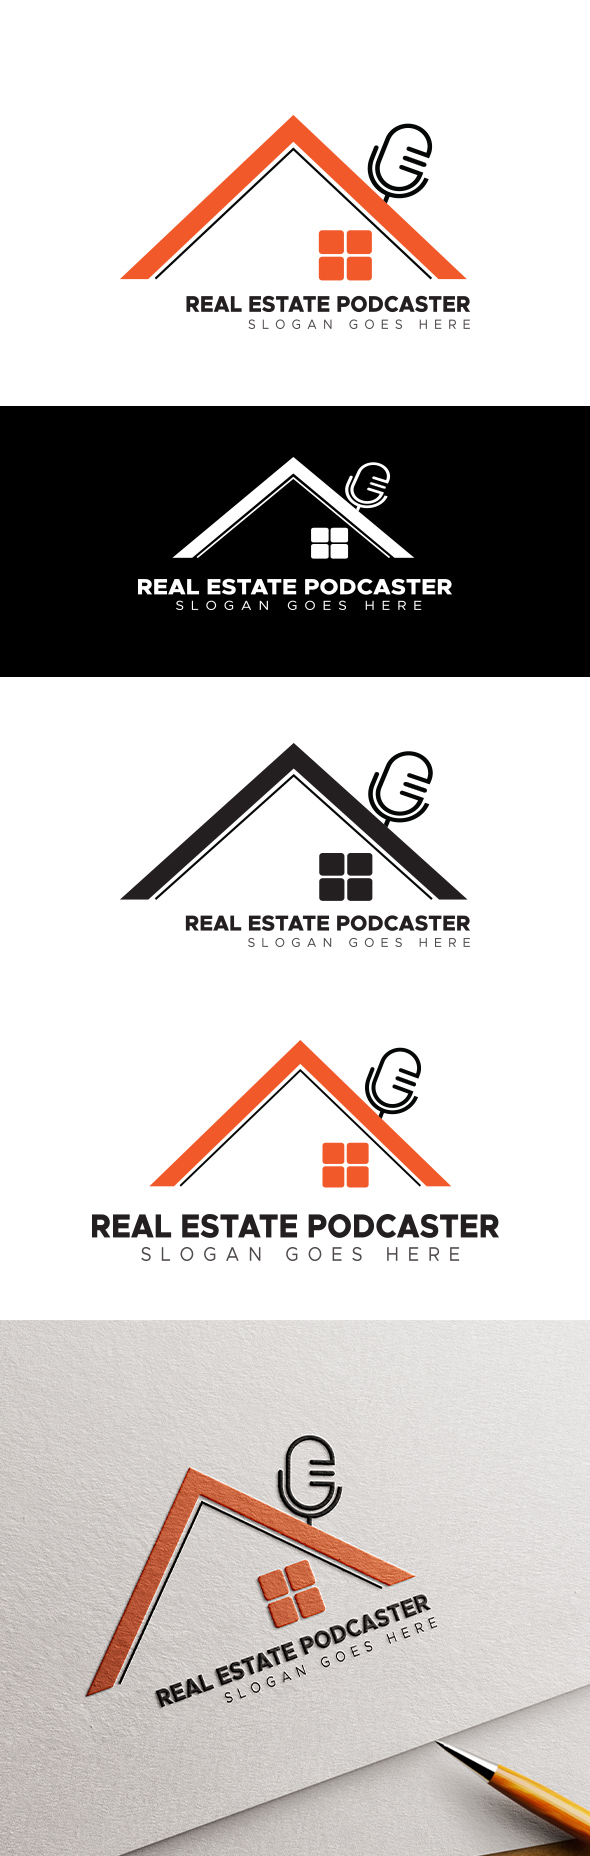 3 Real Estate Podcaster Logo cover image.